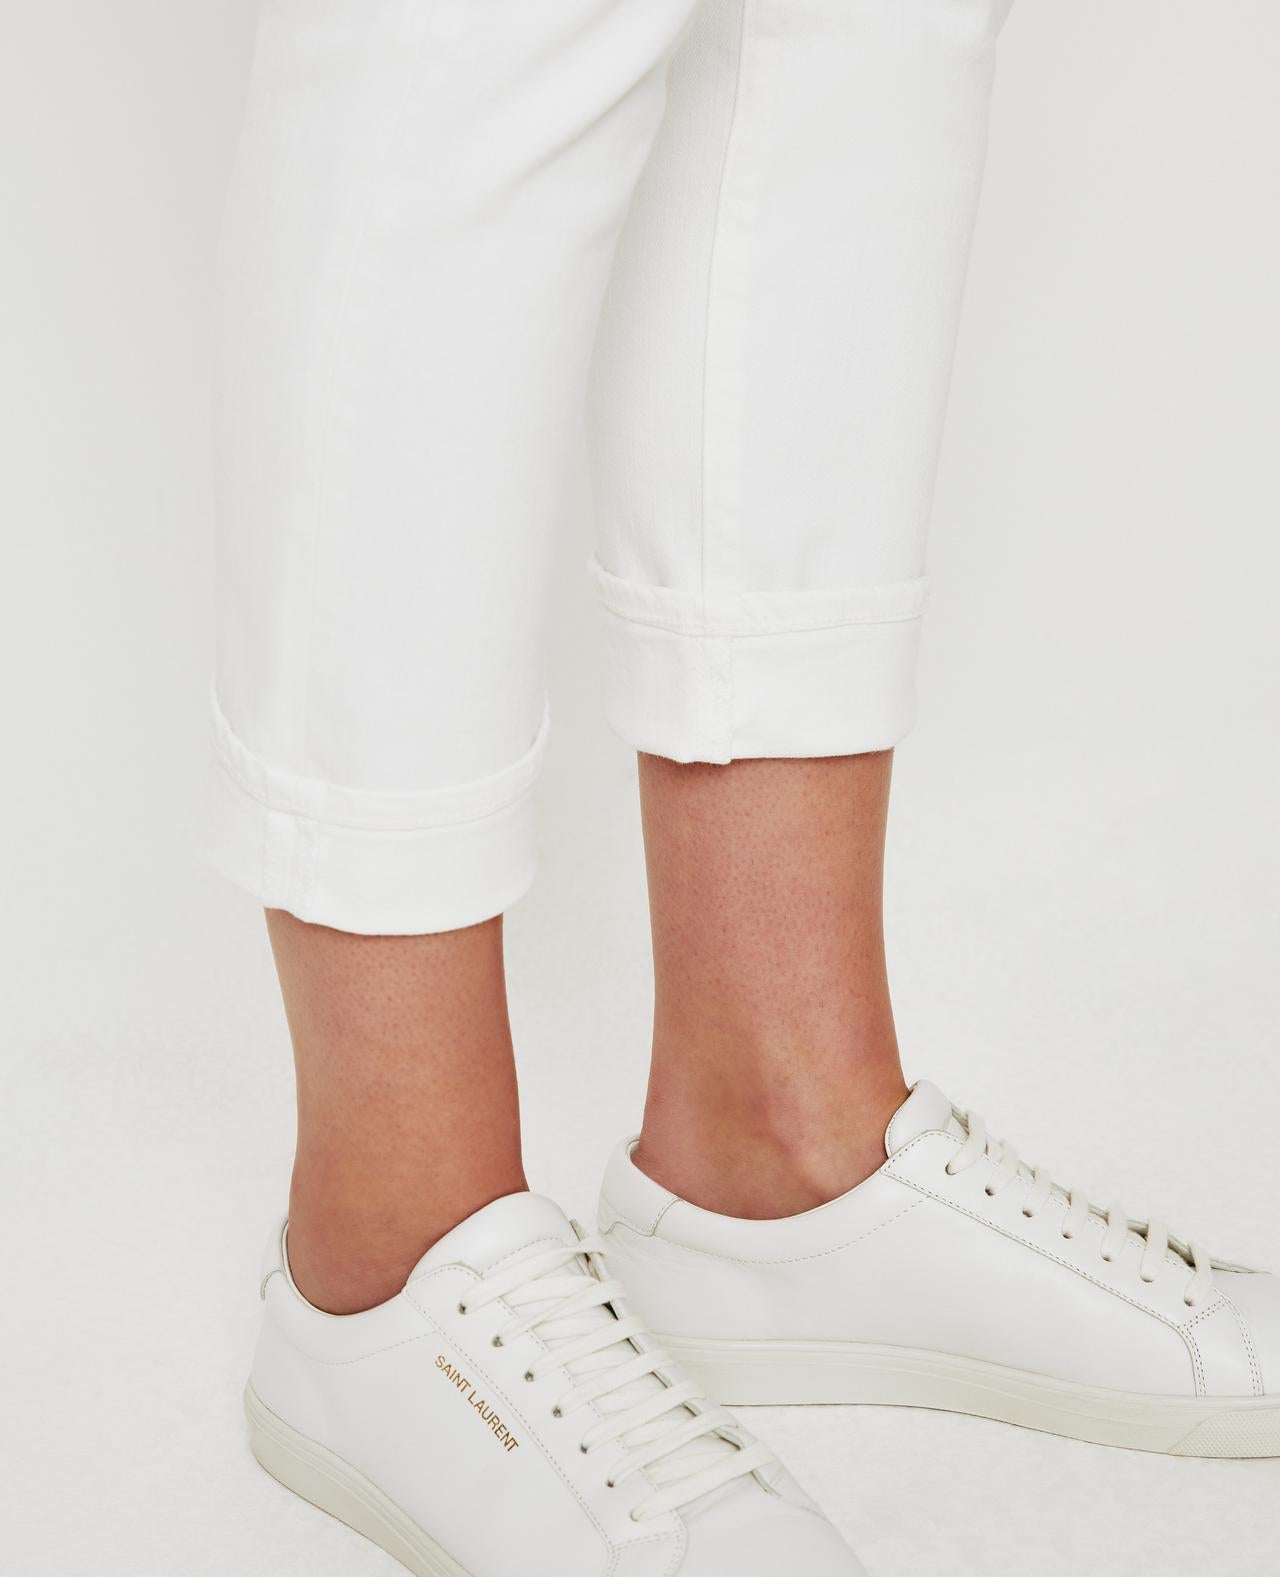 AG Jeans - EX-Boyfriend Slim in Tonal White